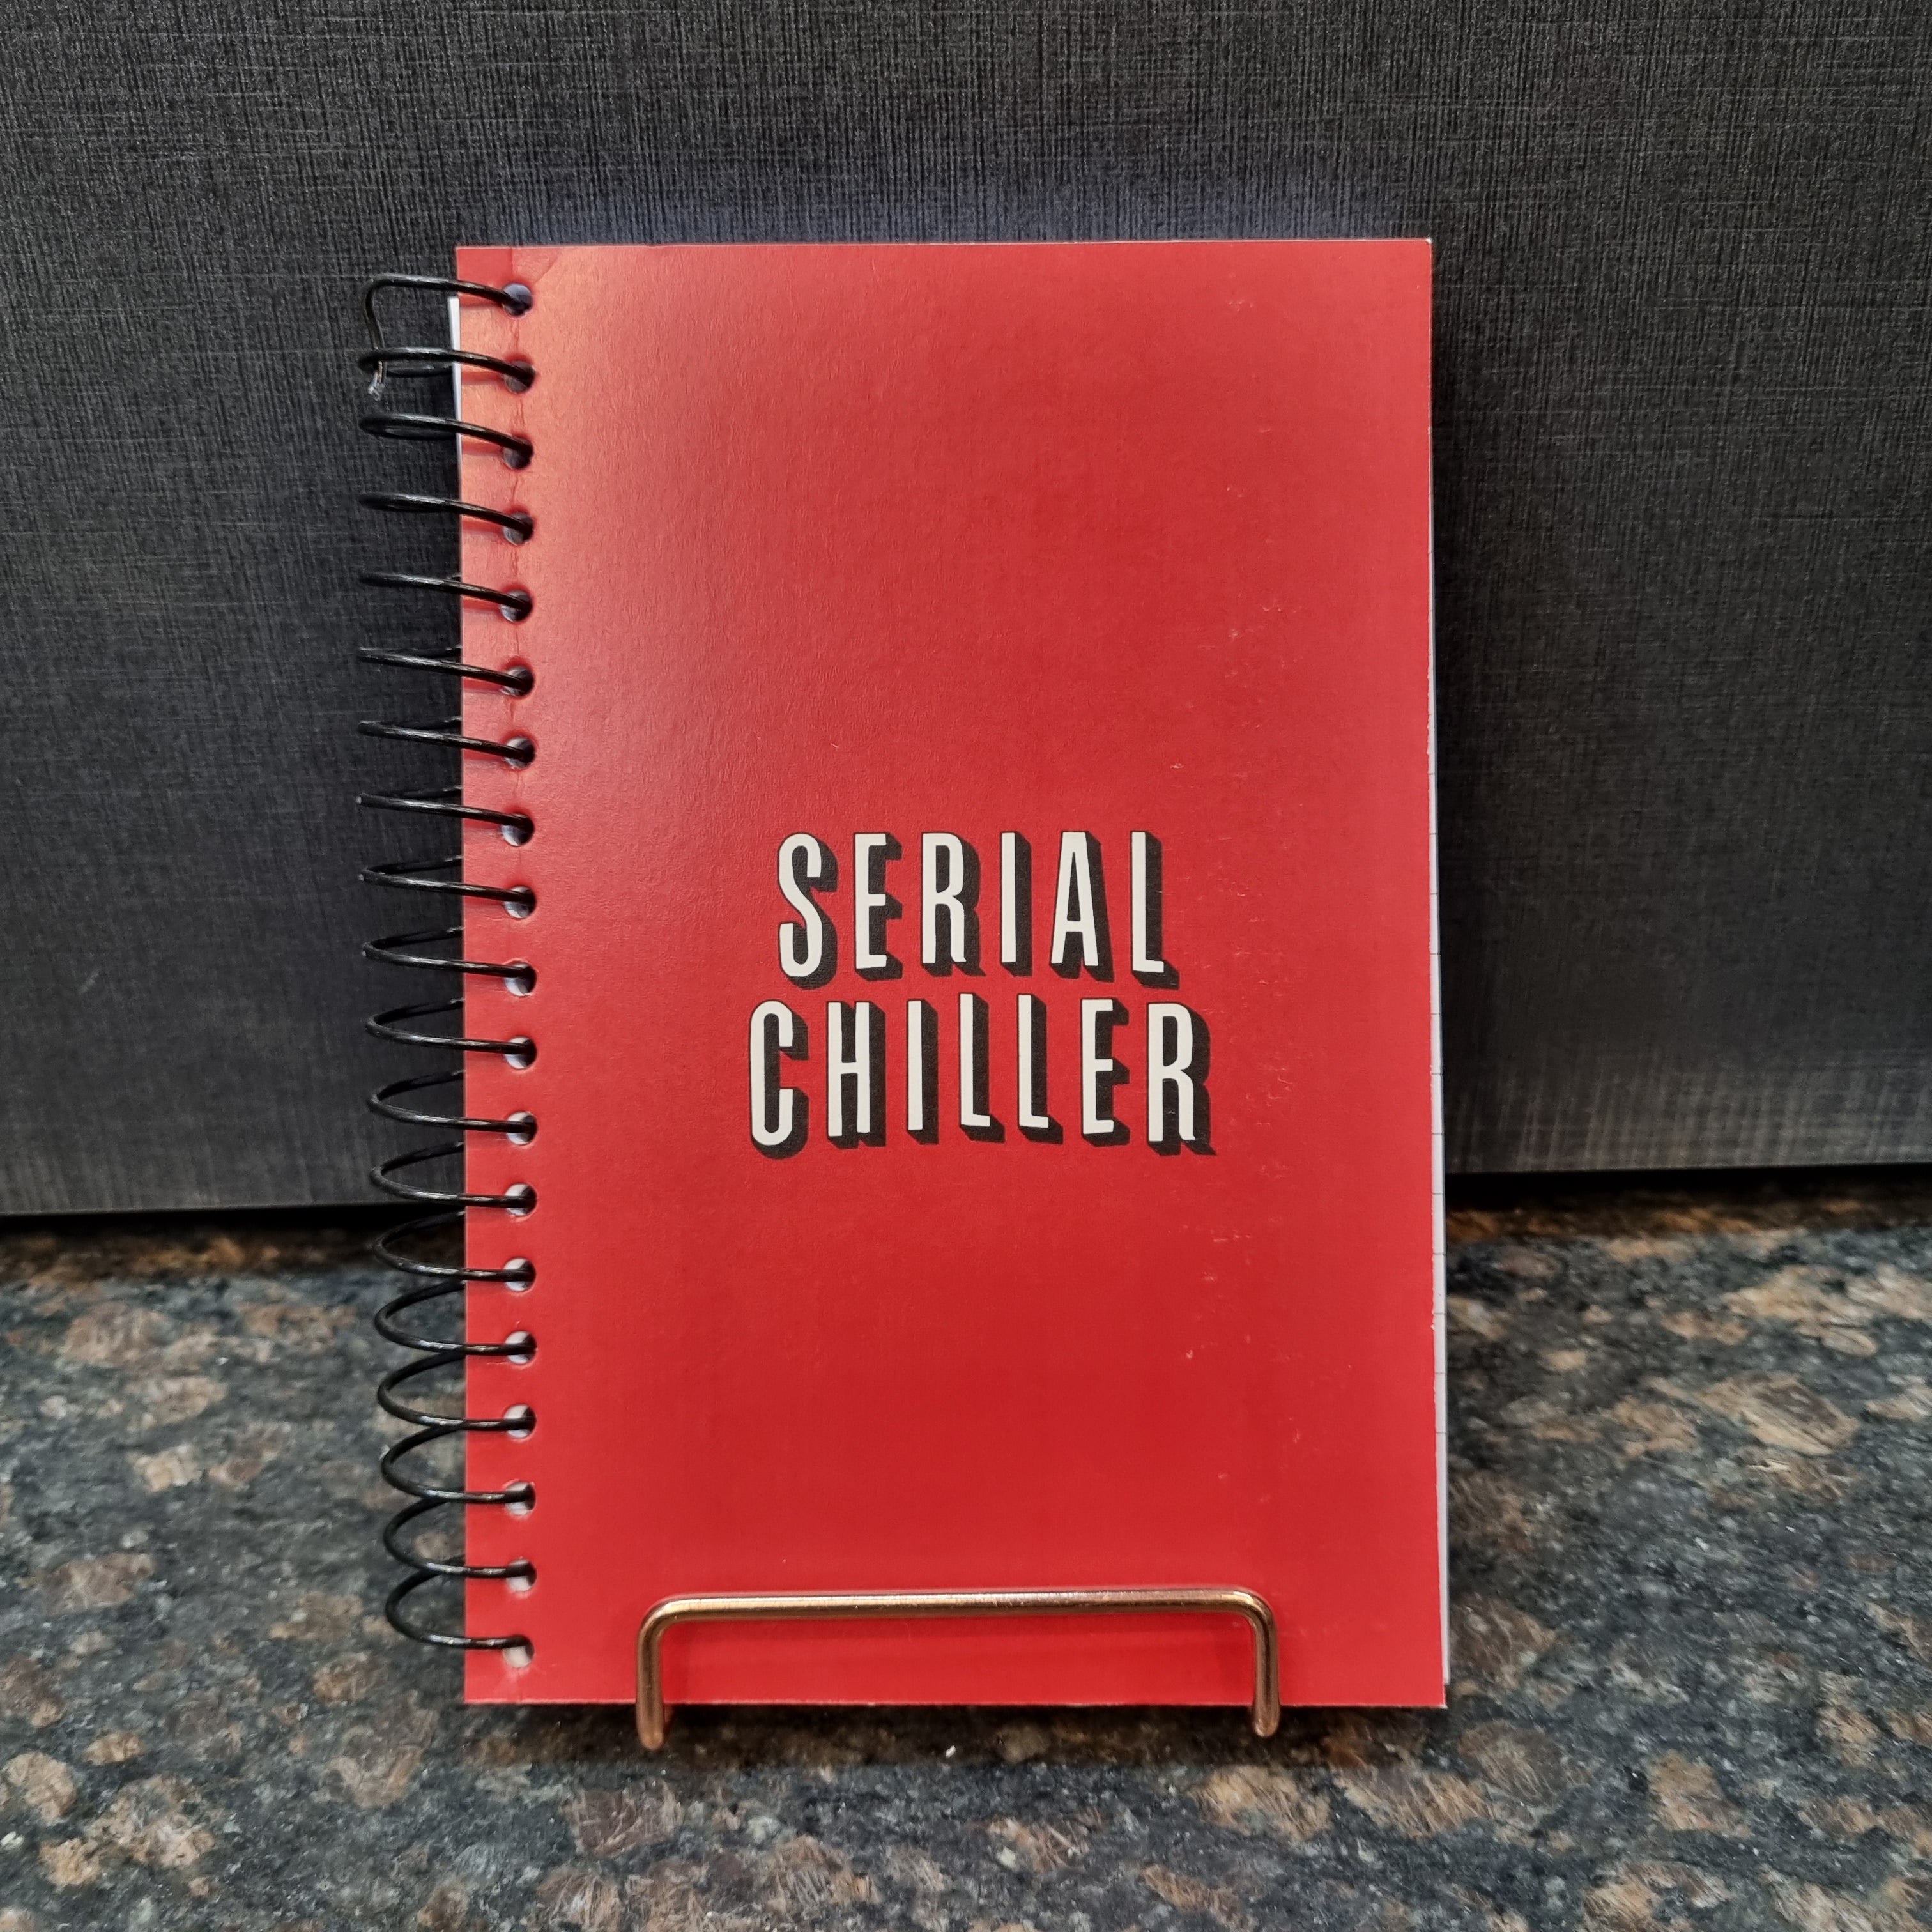 Serial Chiller (A5)